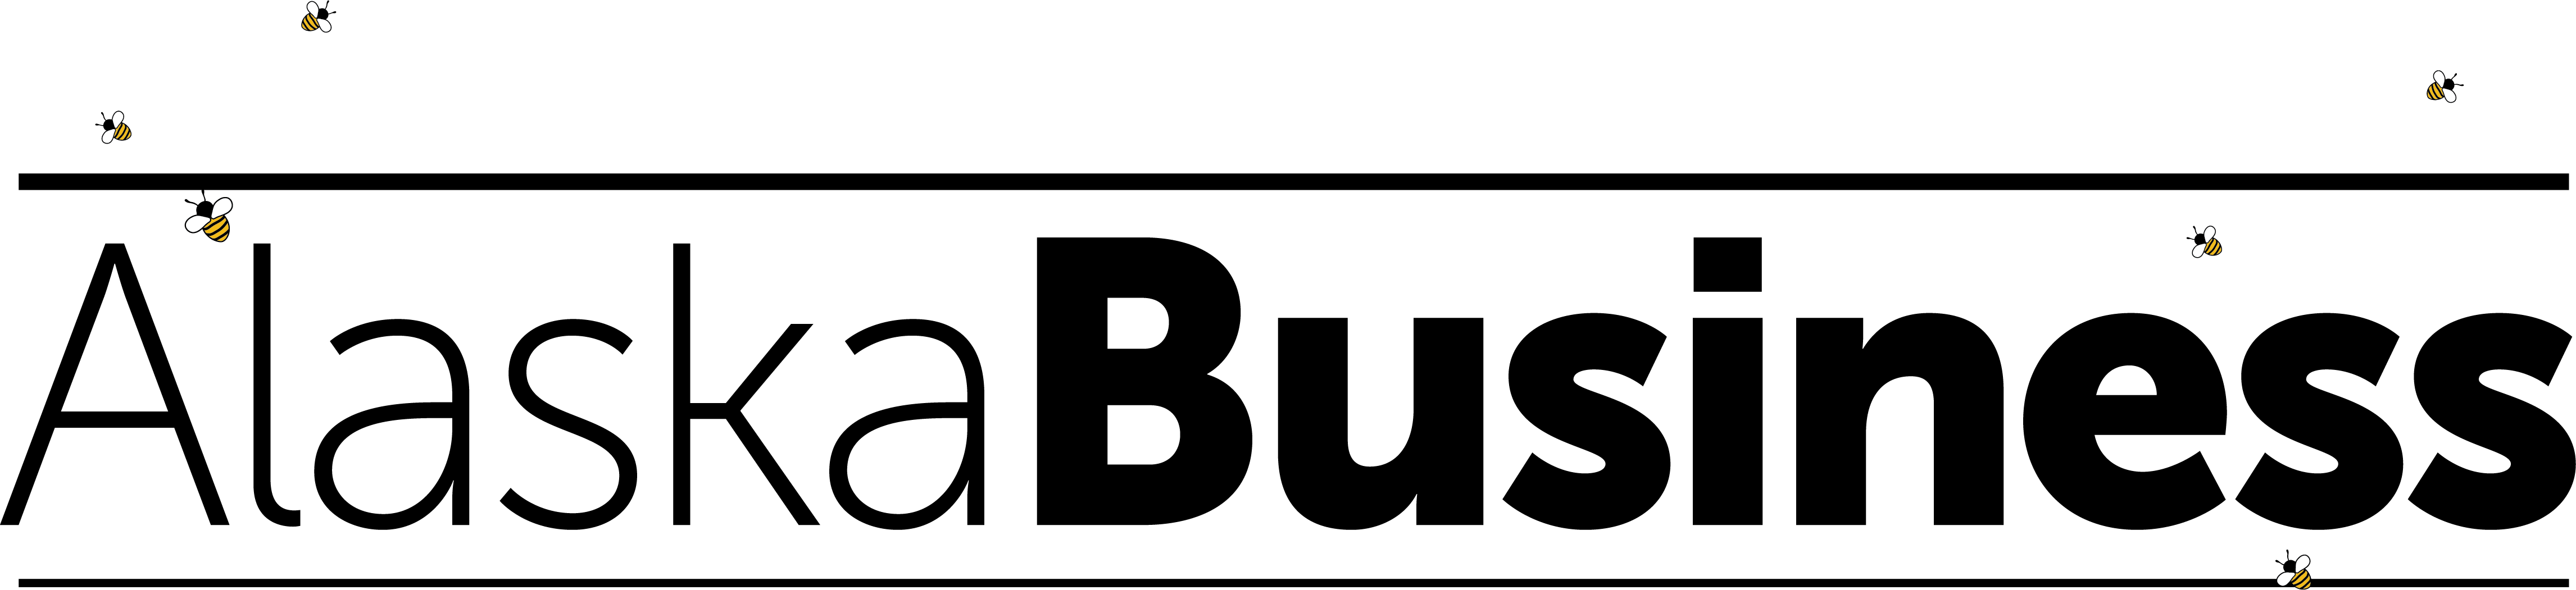 Alaska Business logo